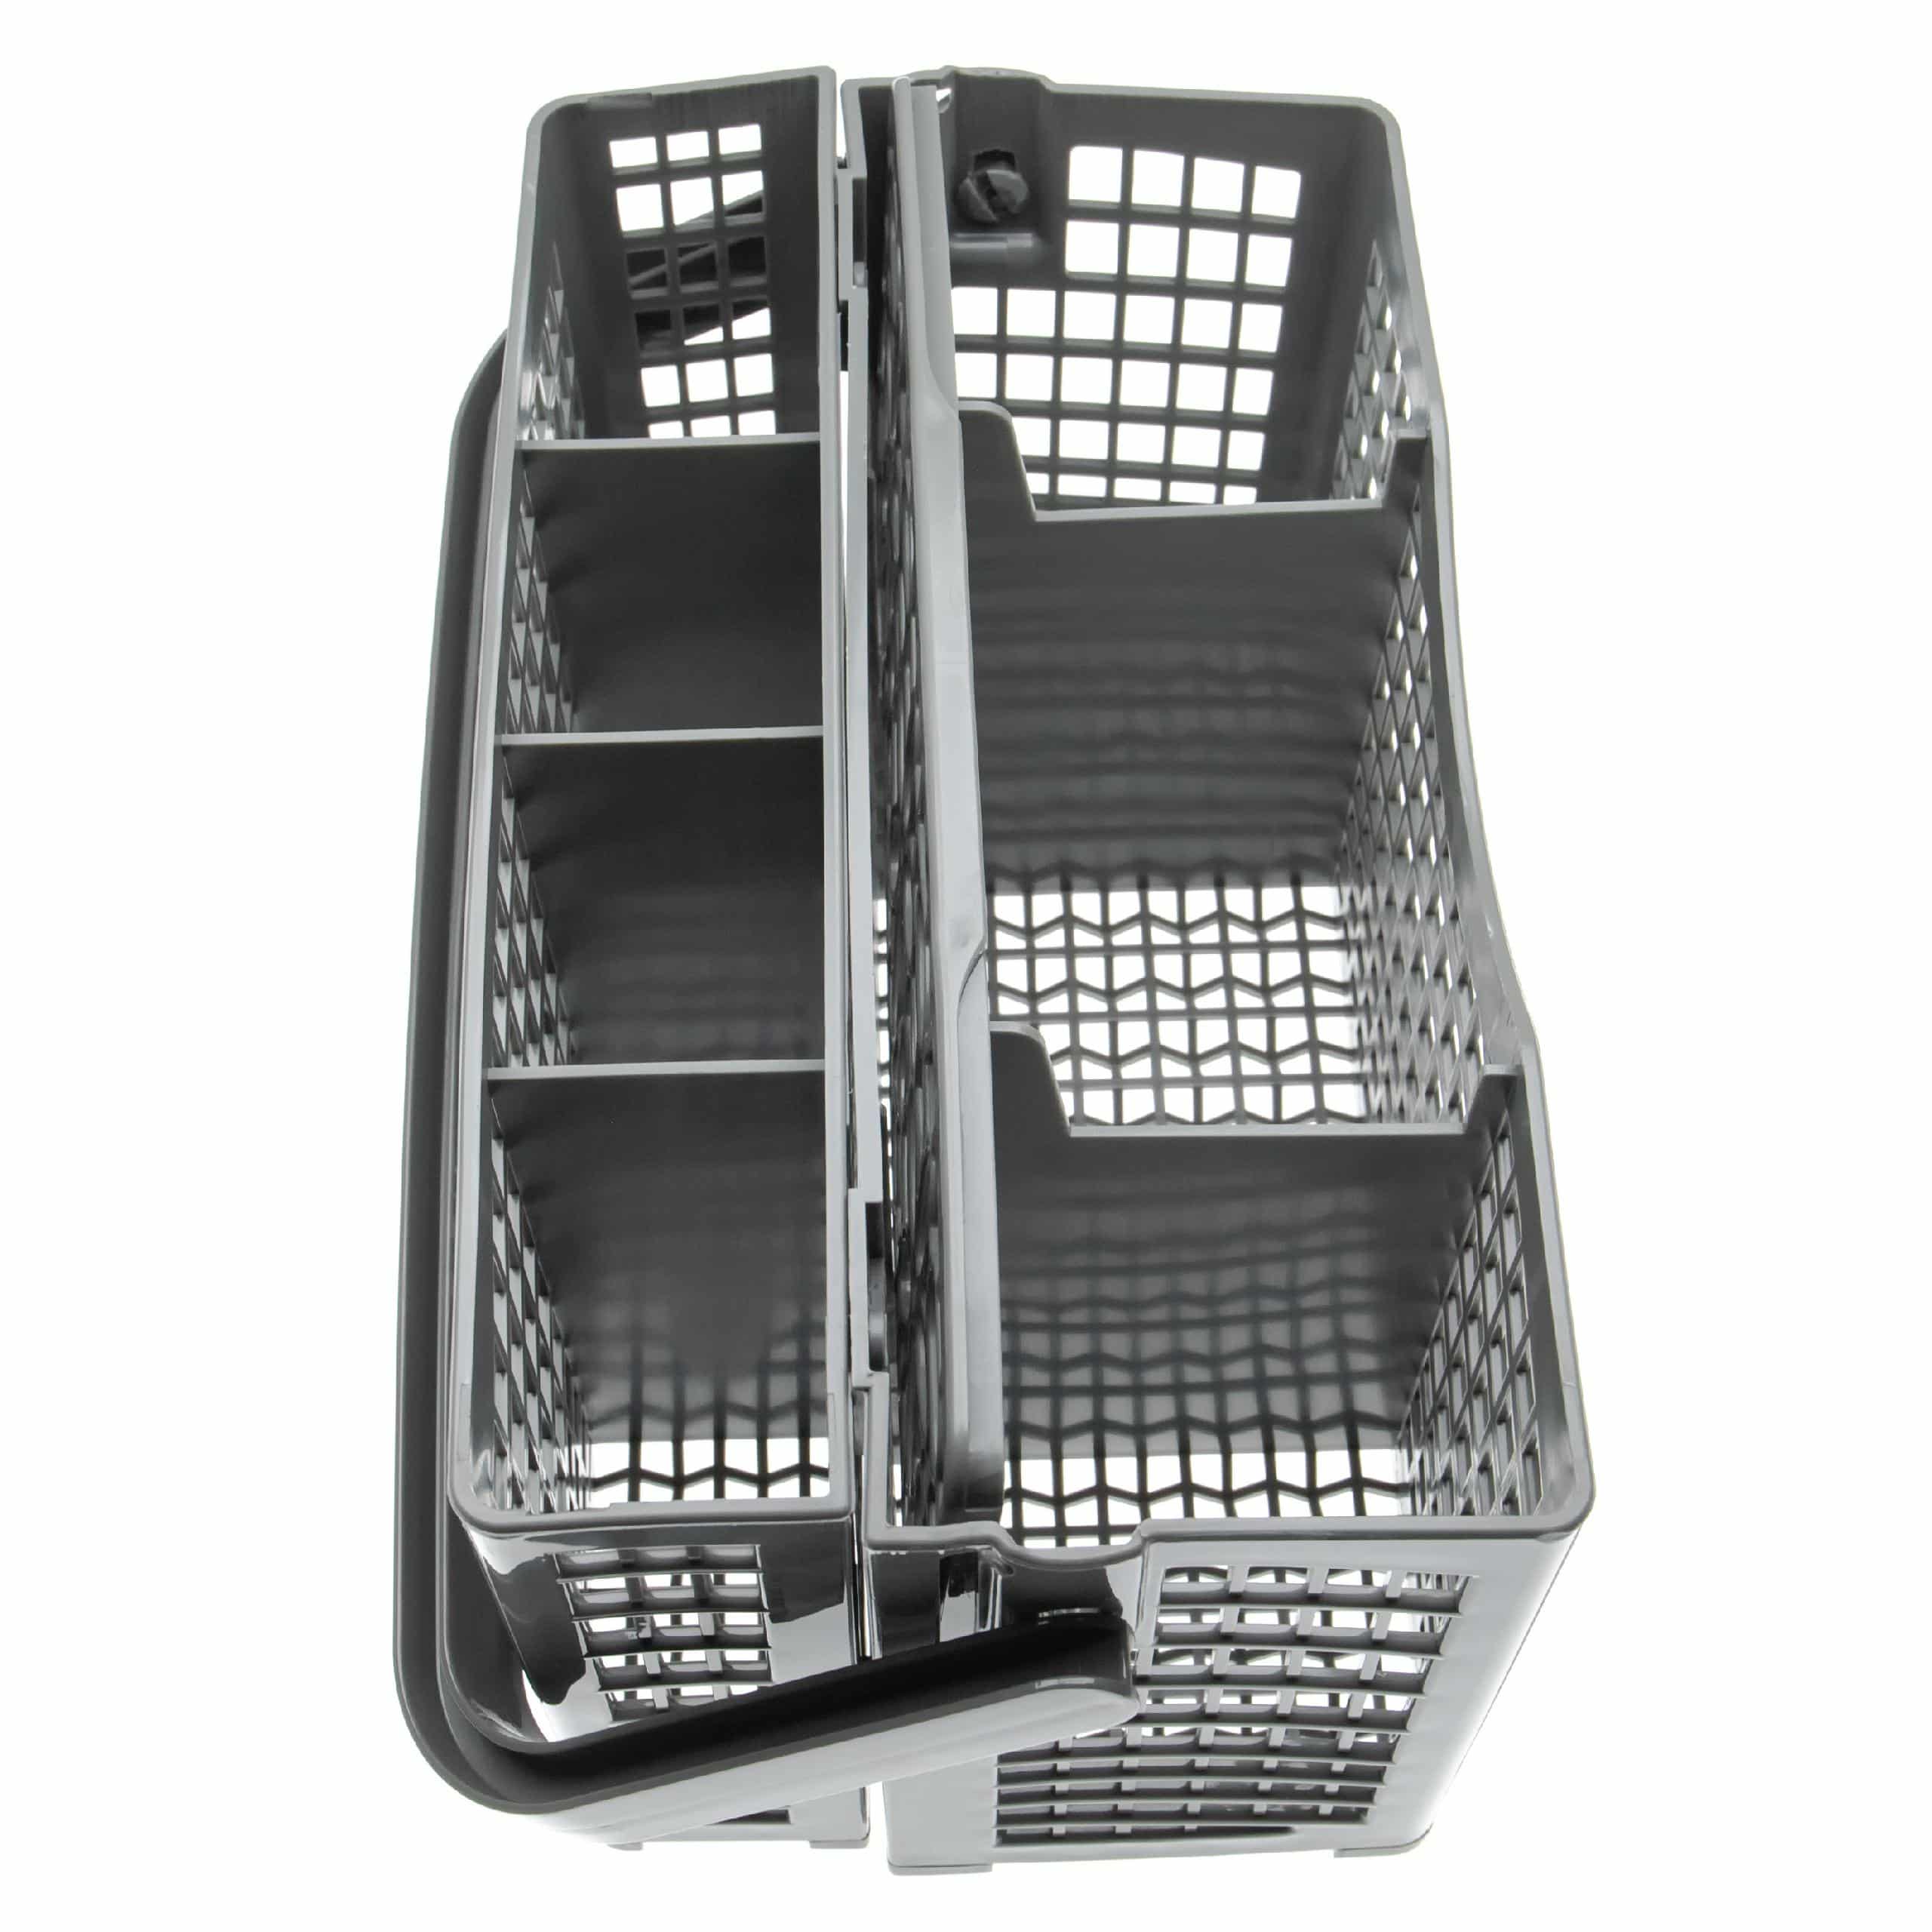 vhbw Cutlery Basket e.g. for Zanussi Dishwashers - Divisible Grey